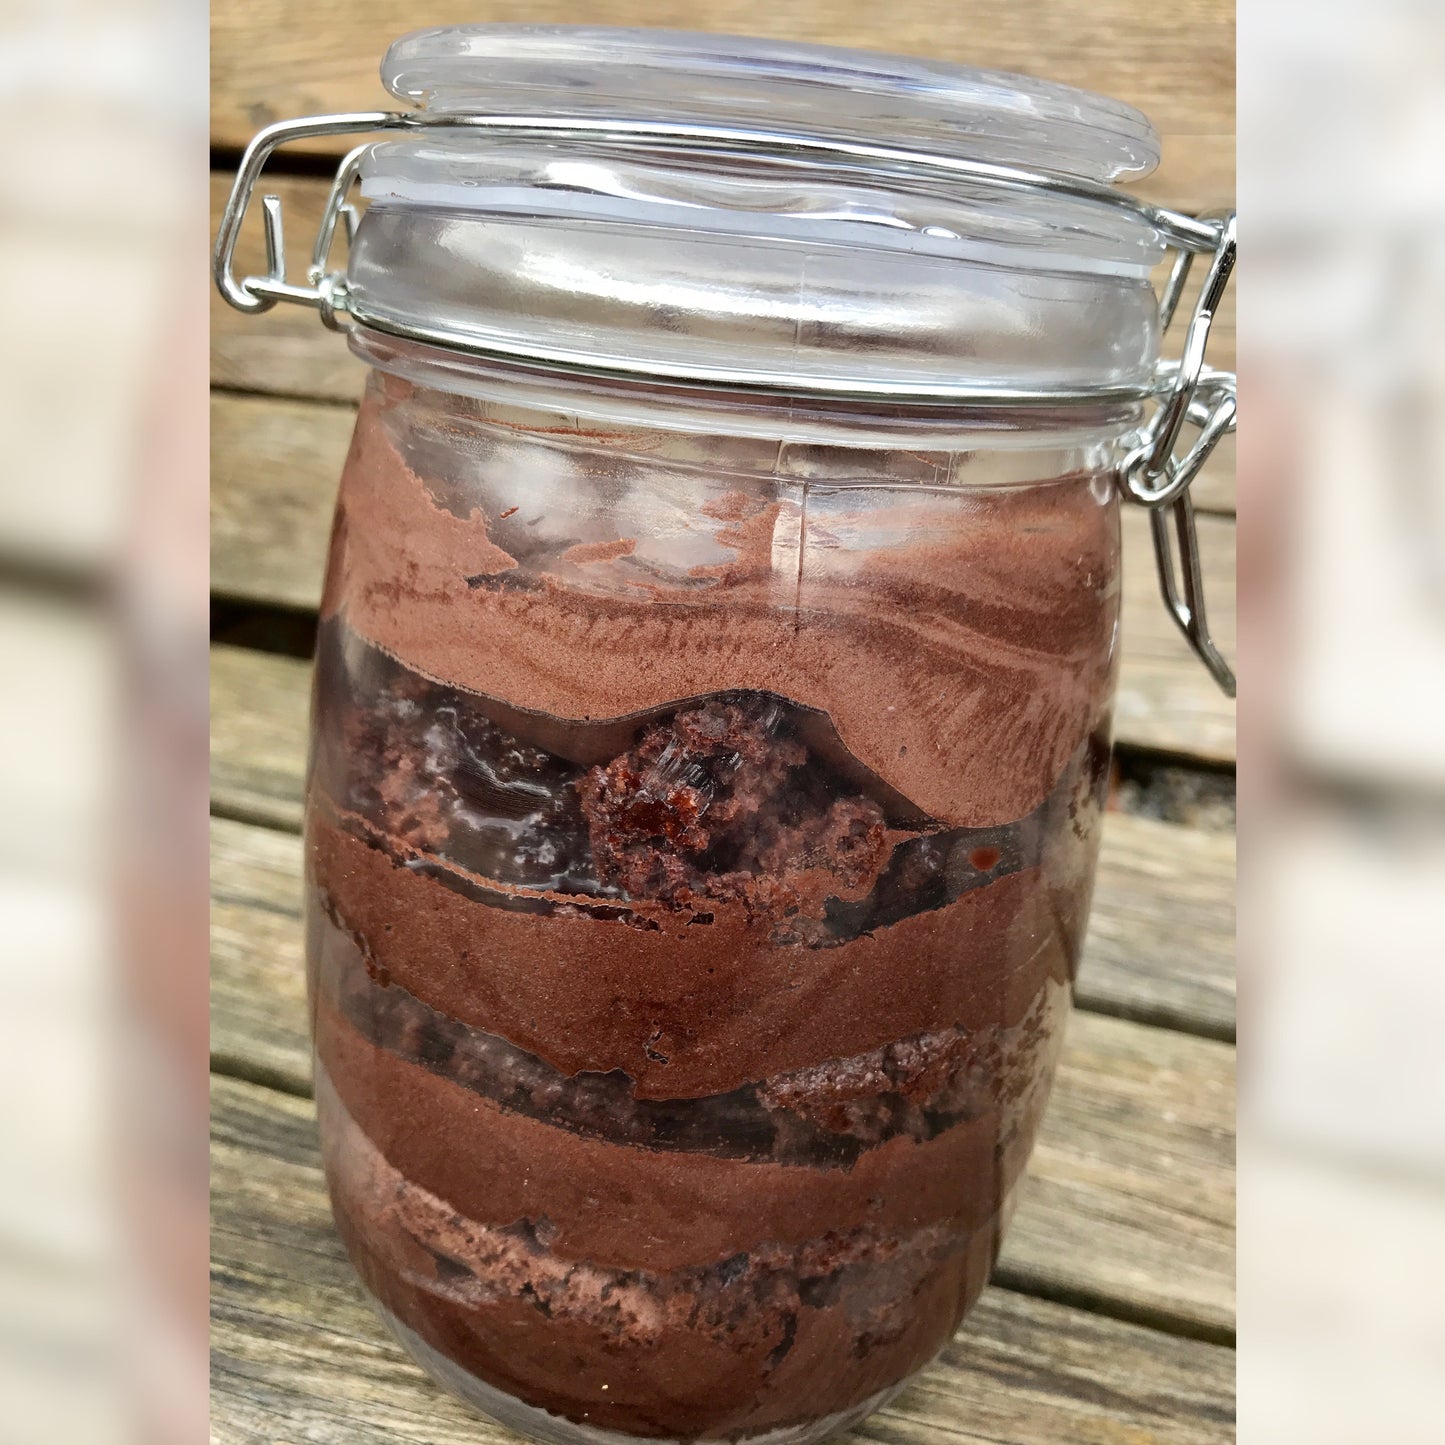 XL Chocolate Cake in a Jar